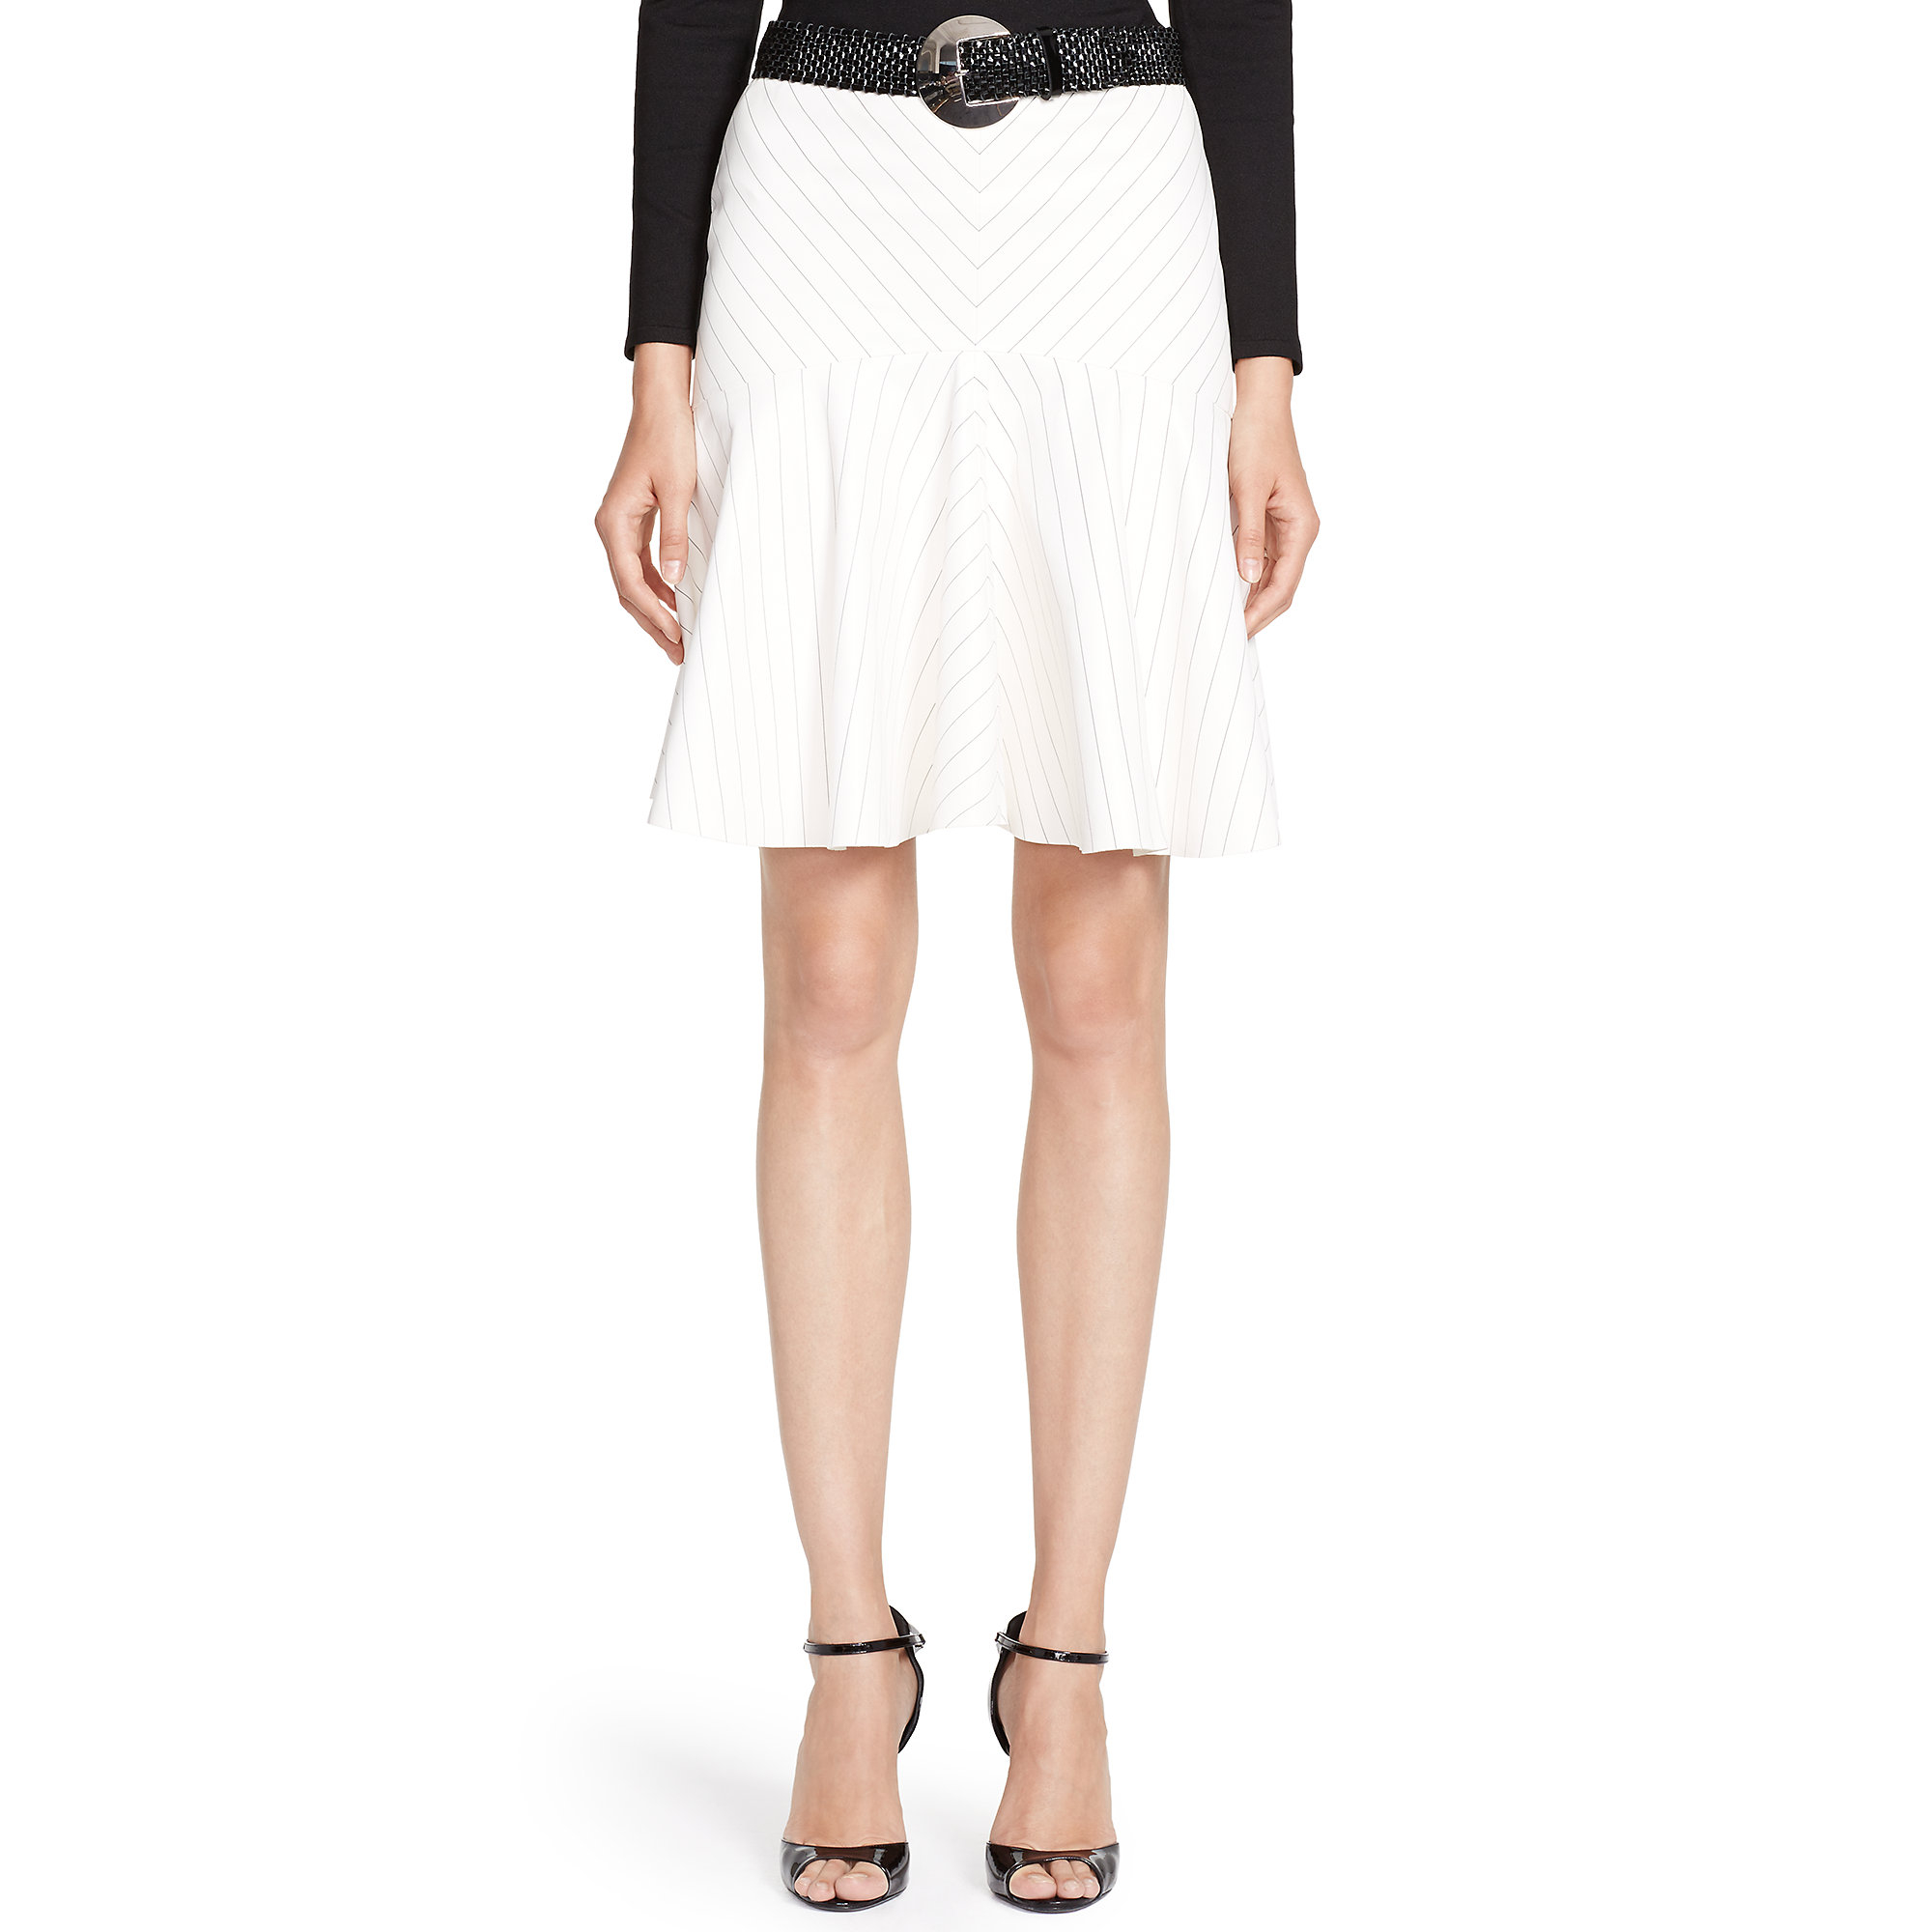 Lyst - Ralph lauren black label Pinstriped Leather Adria Skirt in White